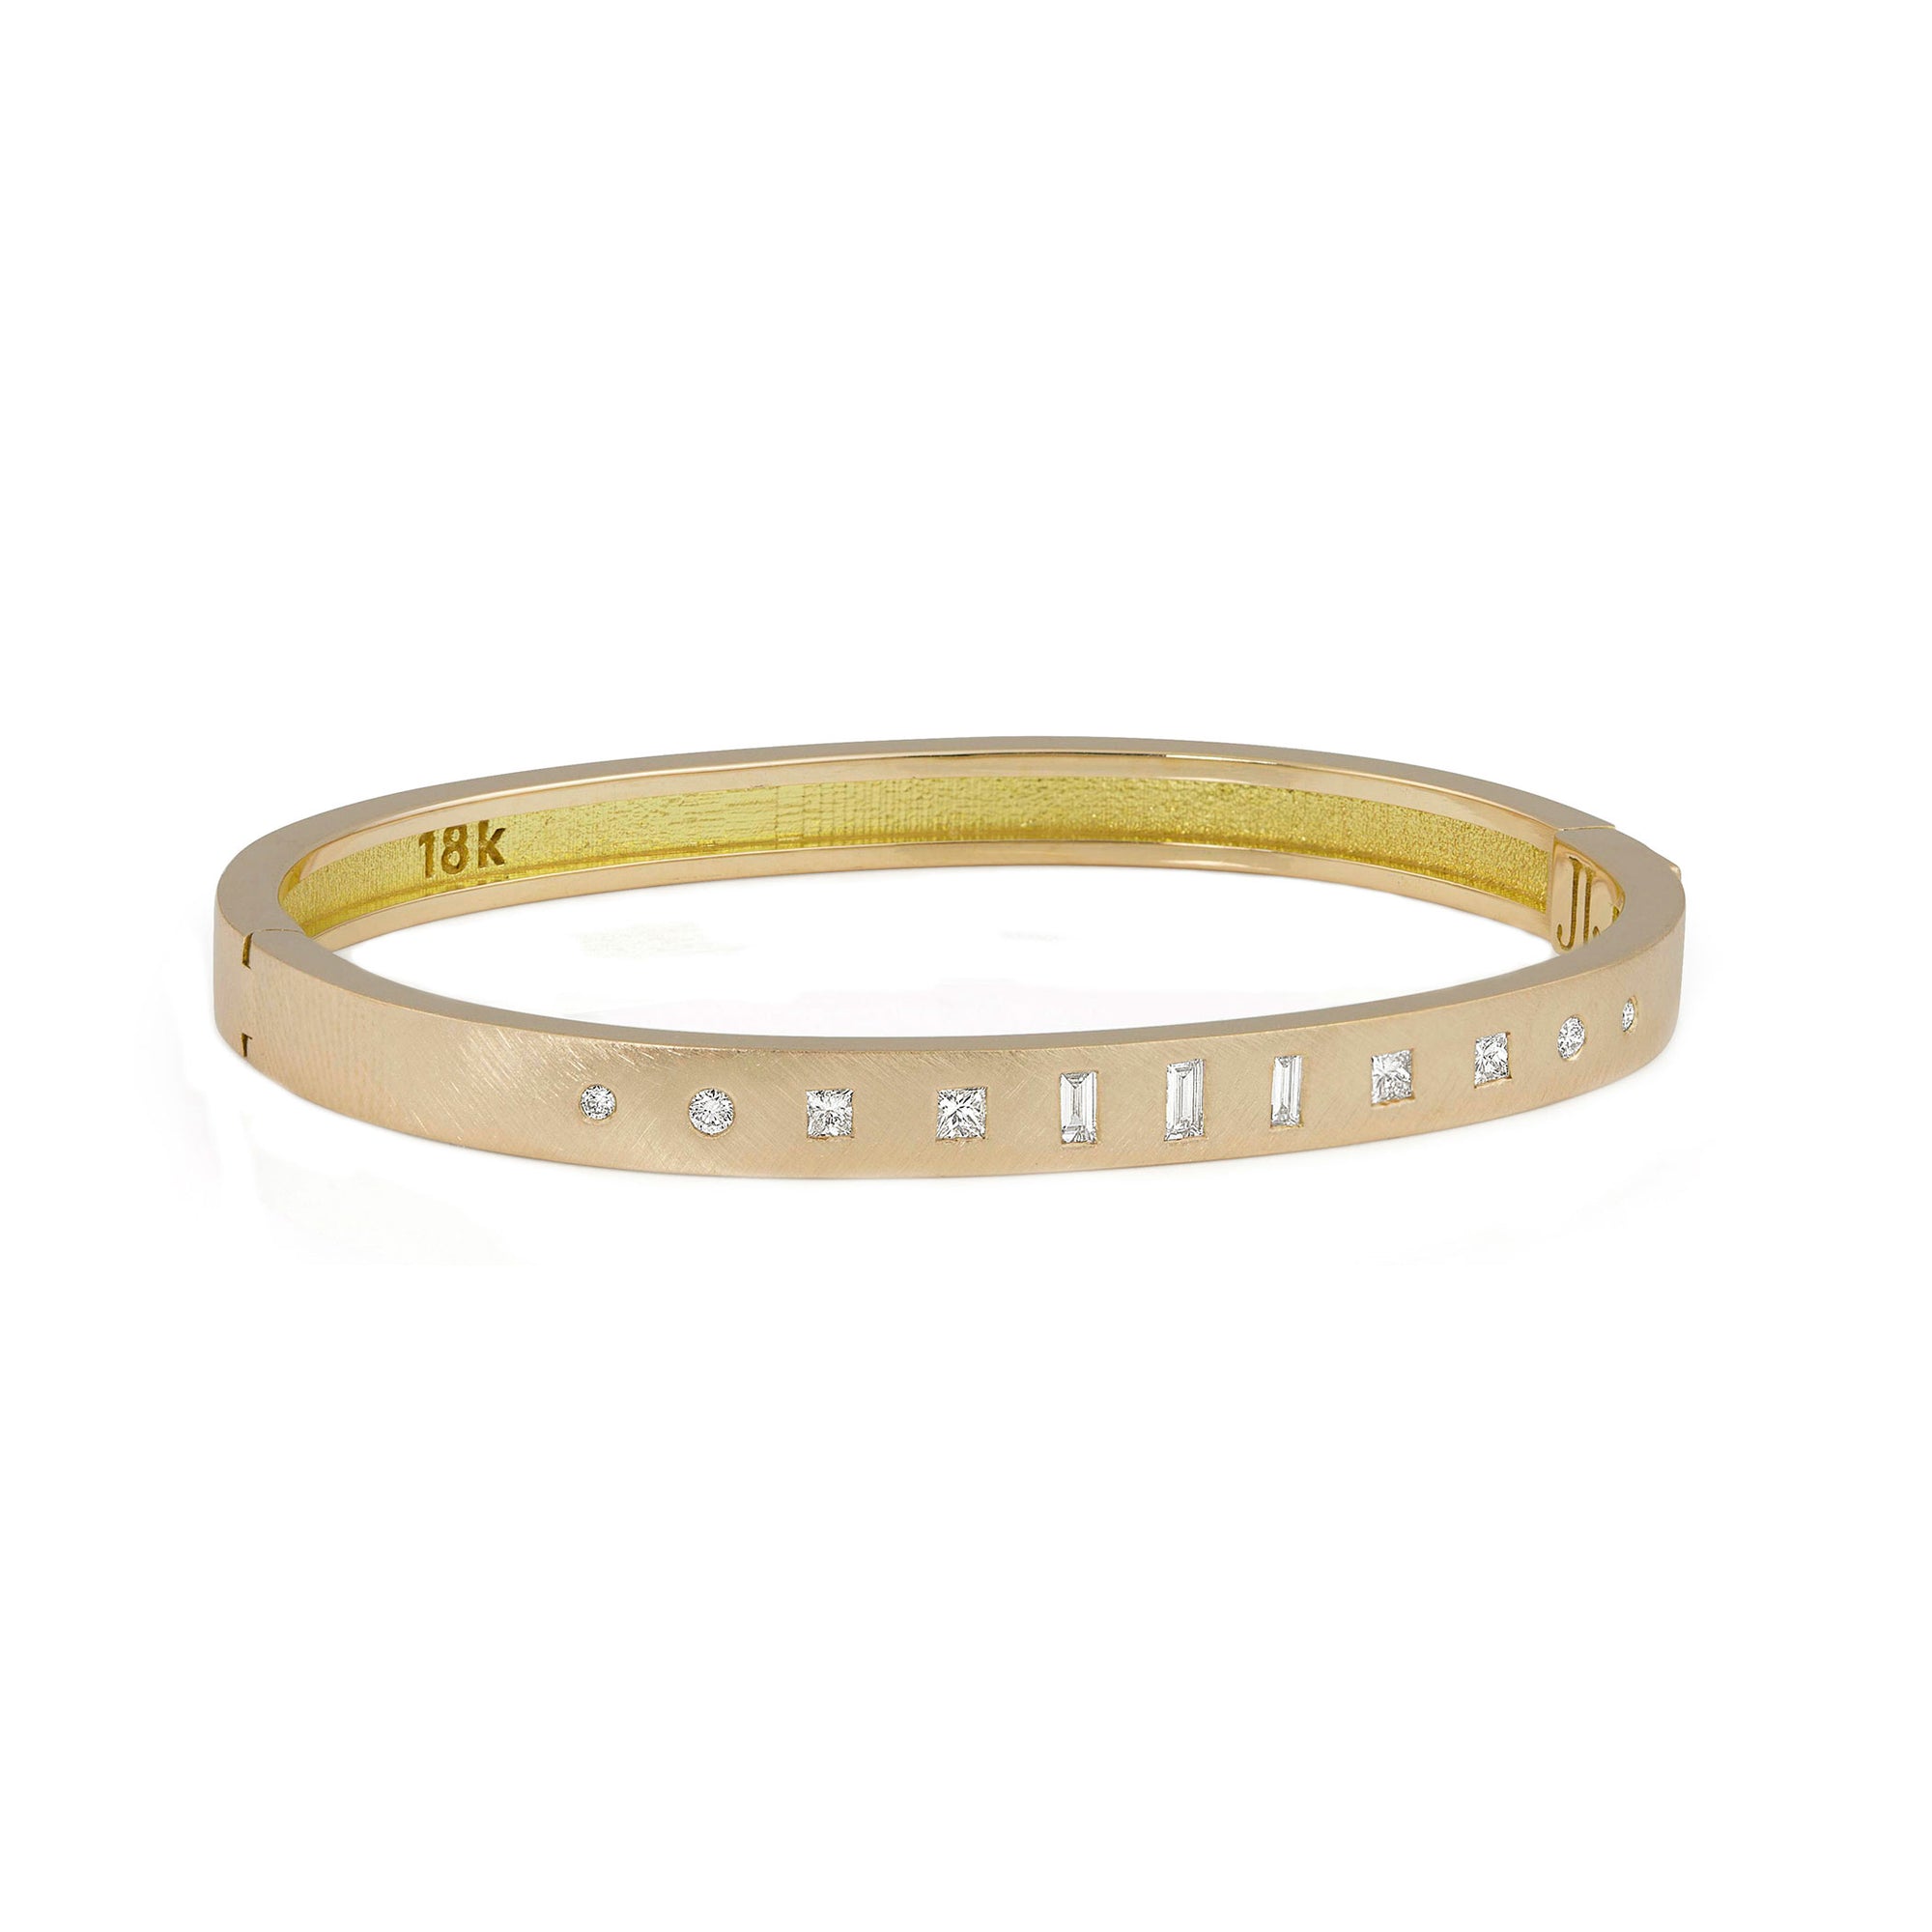 18k yellow gold TUMI hinged cuff bracelet with mixed white diamonds